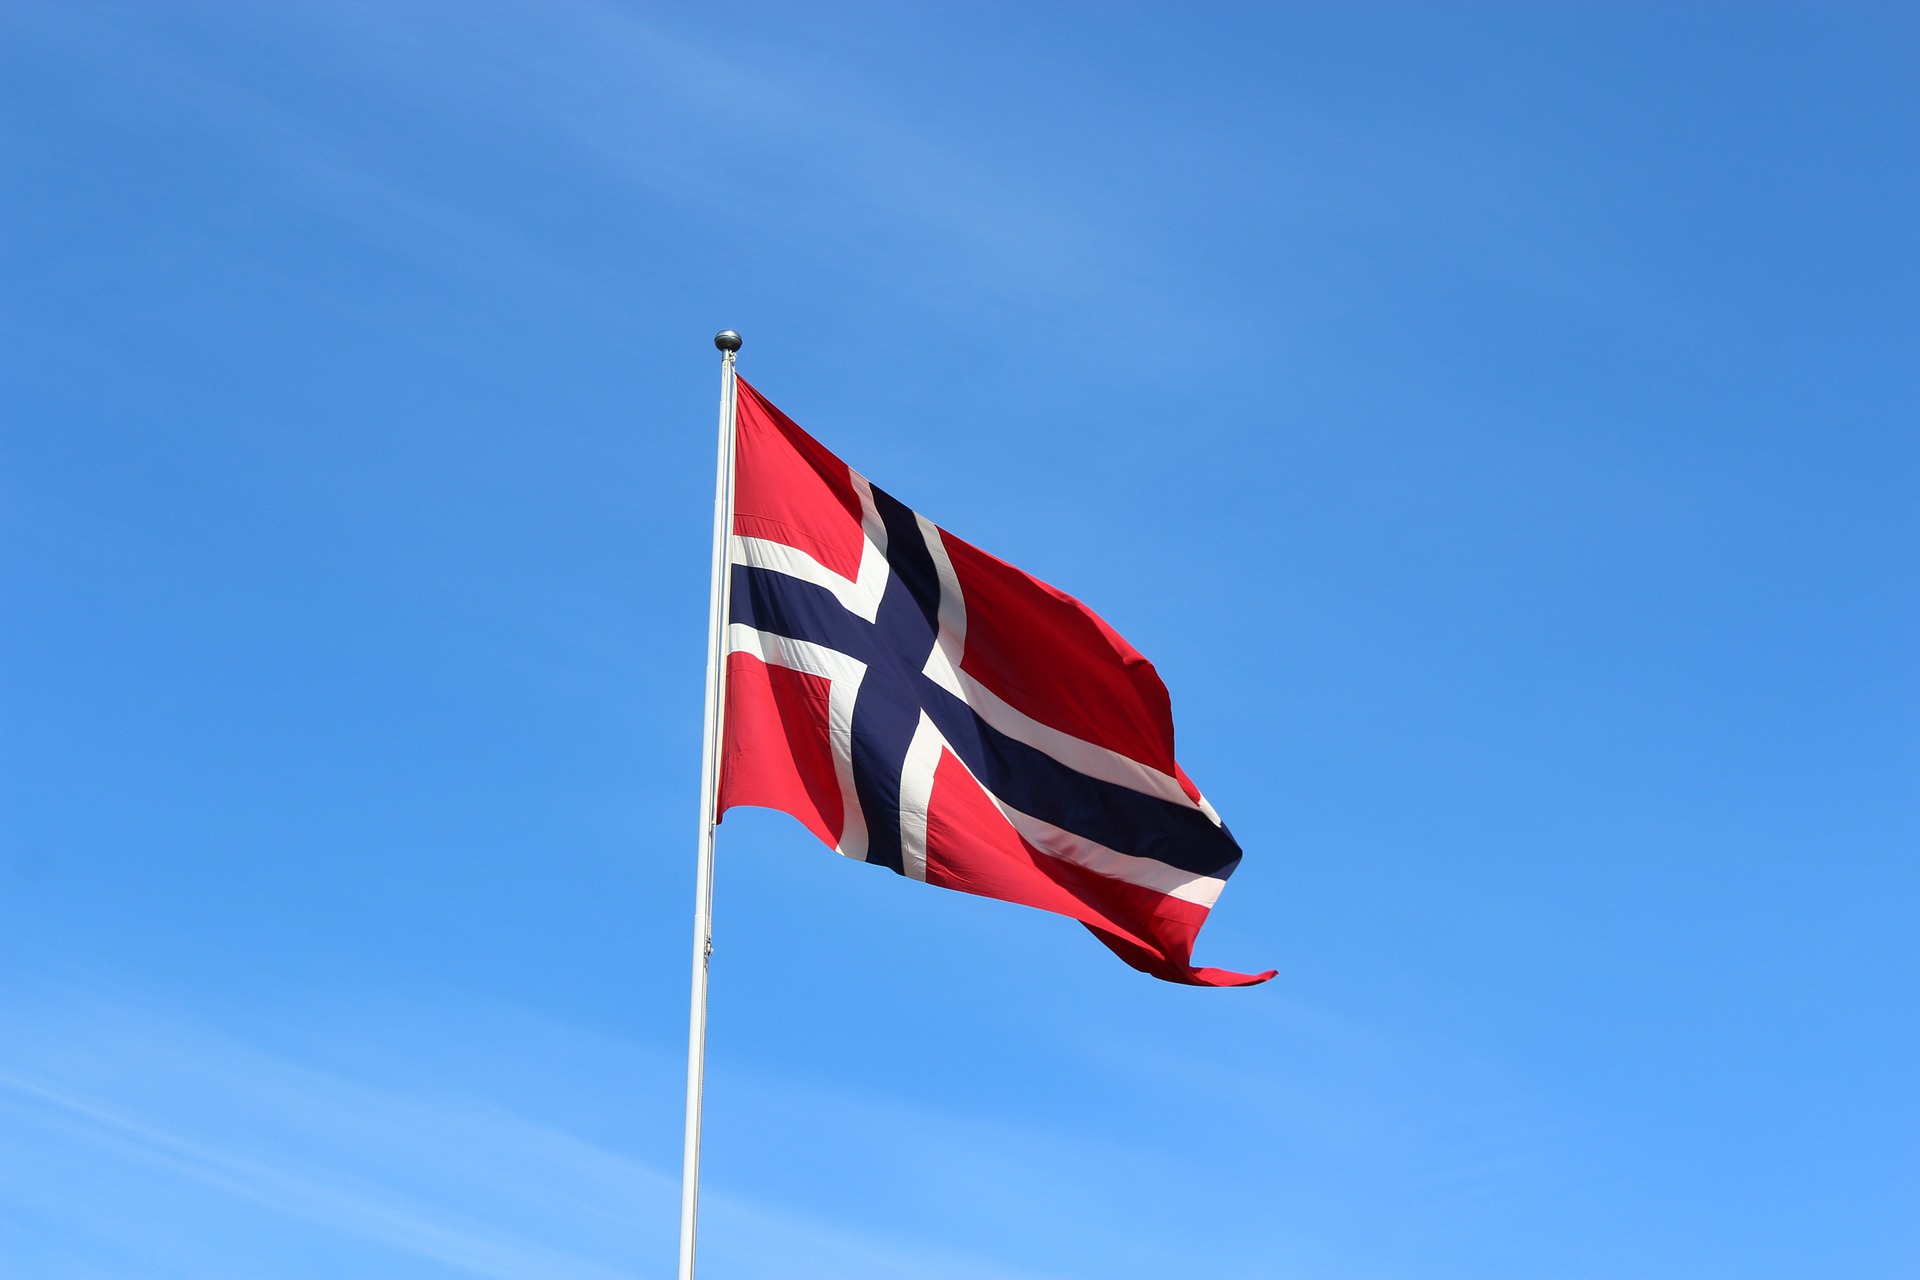 Въезд в Норвегию без веских оснований запрещен с 29 января в рамках борьбы с COVID-19